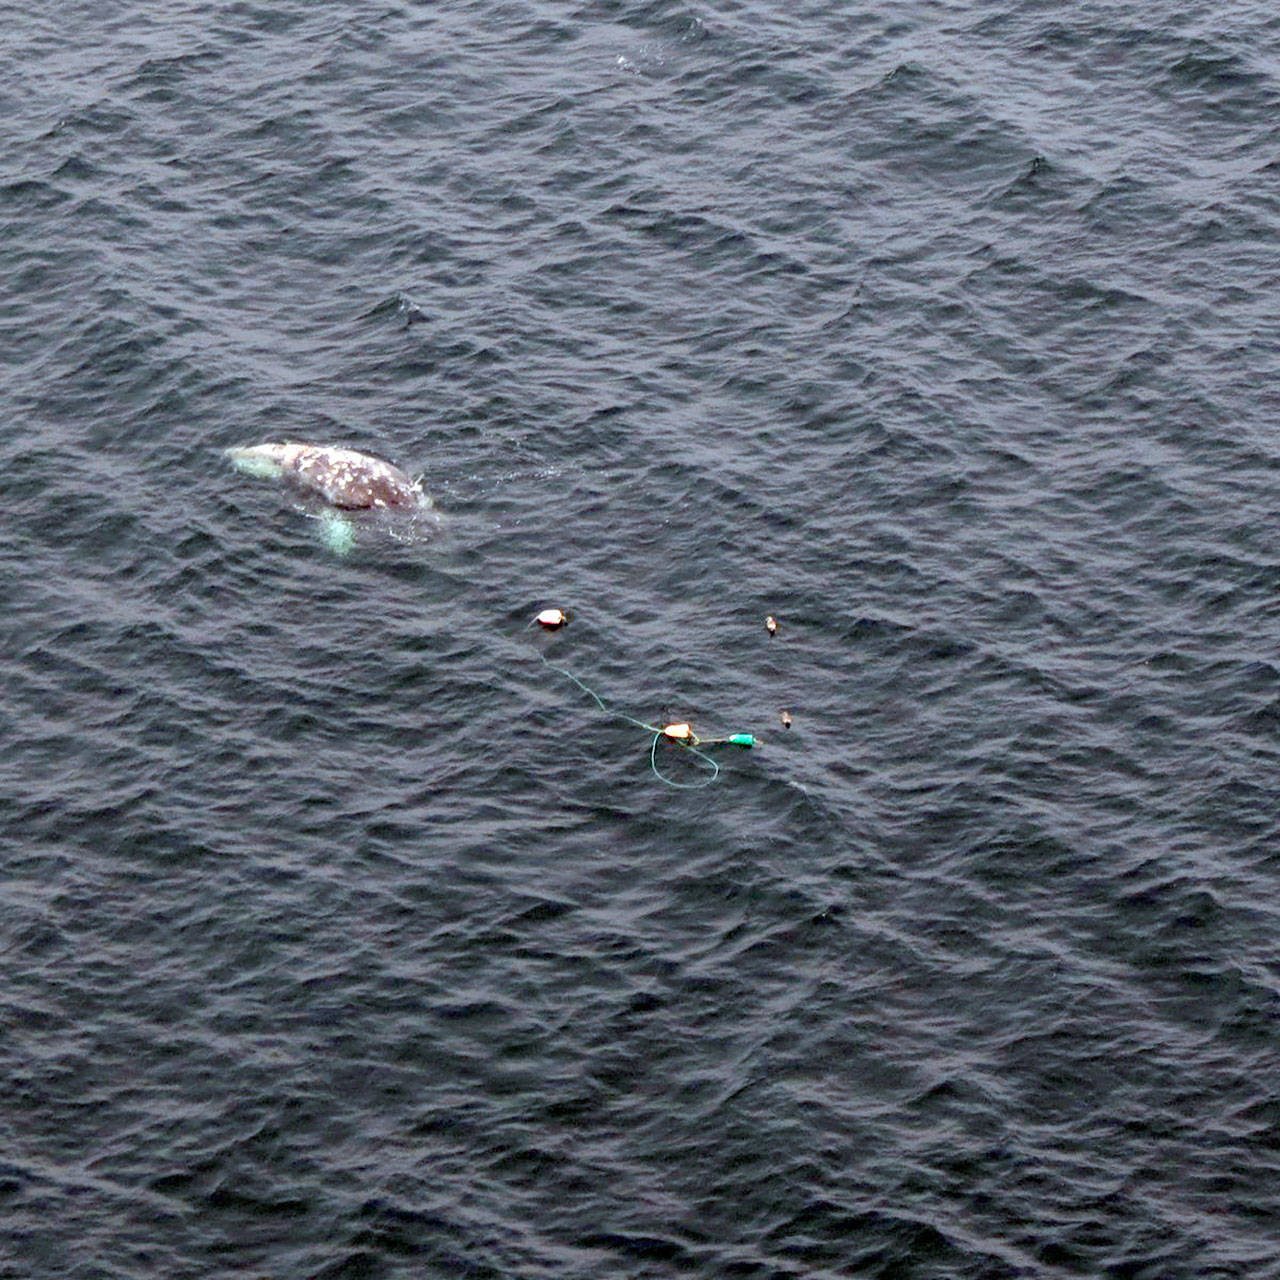 Authorities respond to entangled whale near La Push